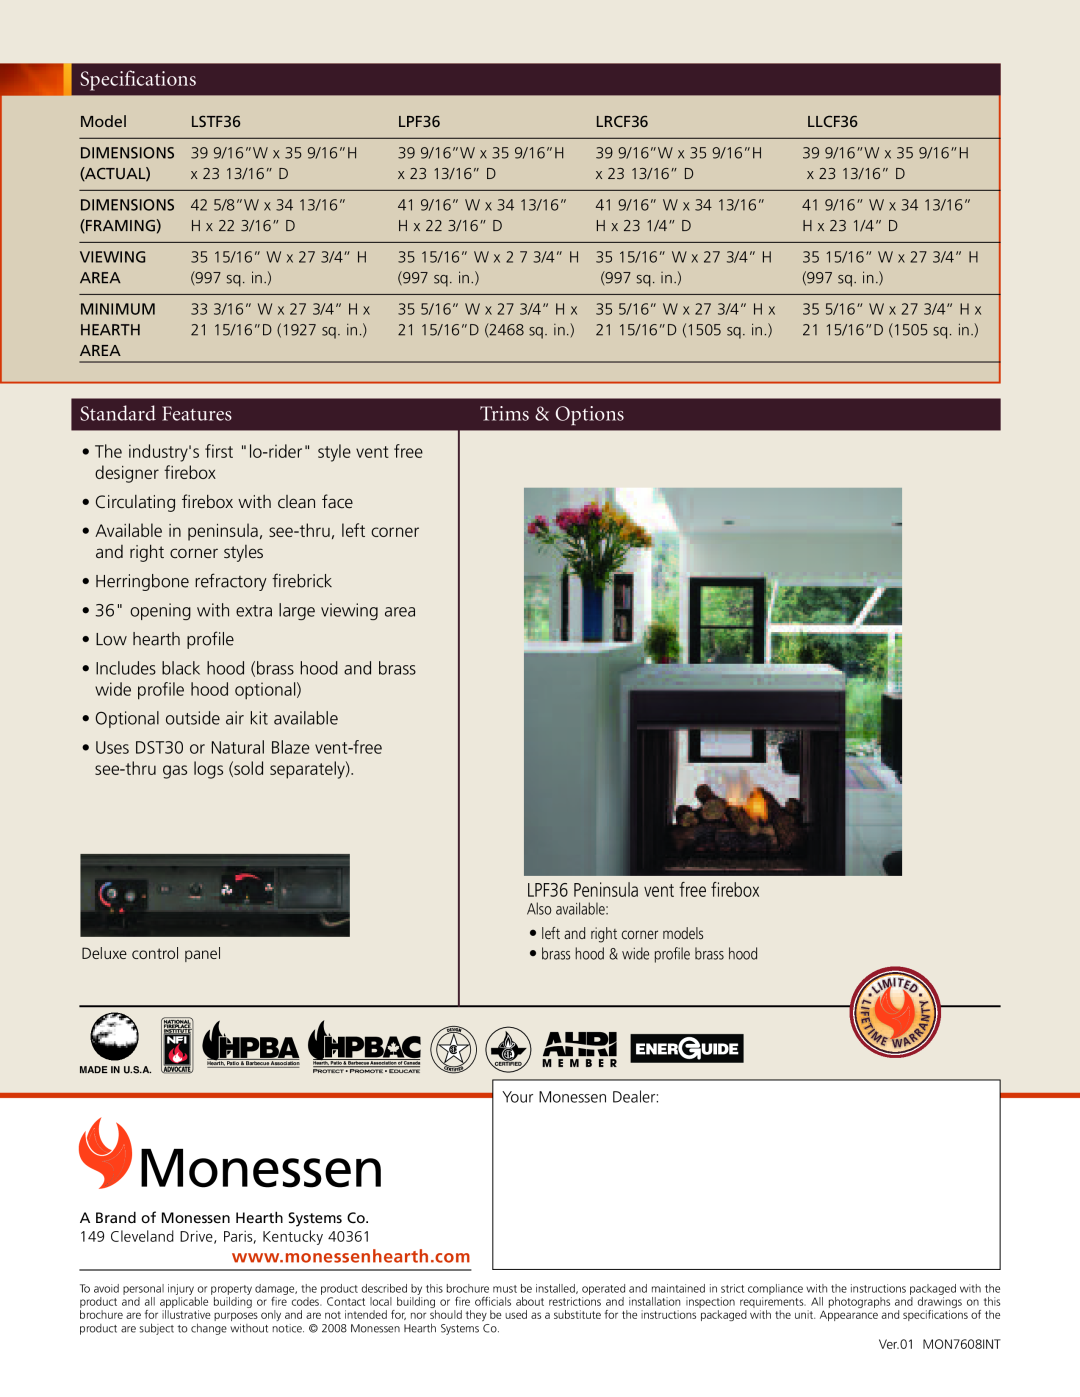 Monessen Hearth LRCF36, LLCF36 manual Specifications, Standard Features, Trims & Options, Monessen, Hpba 